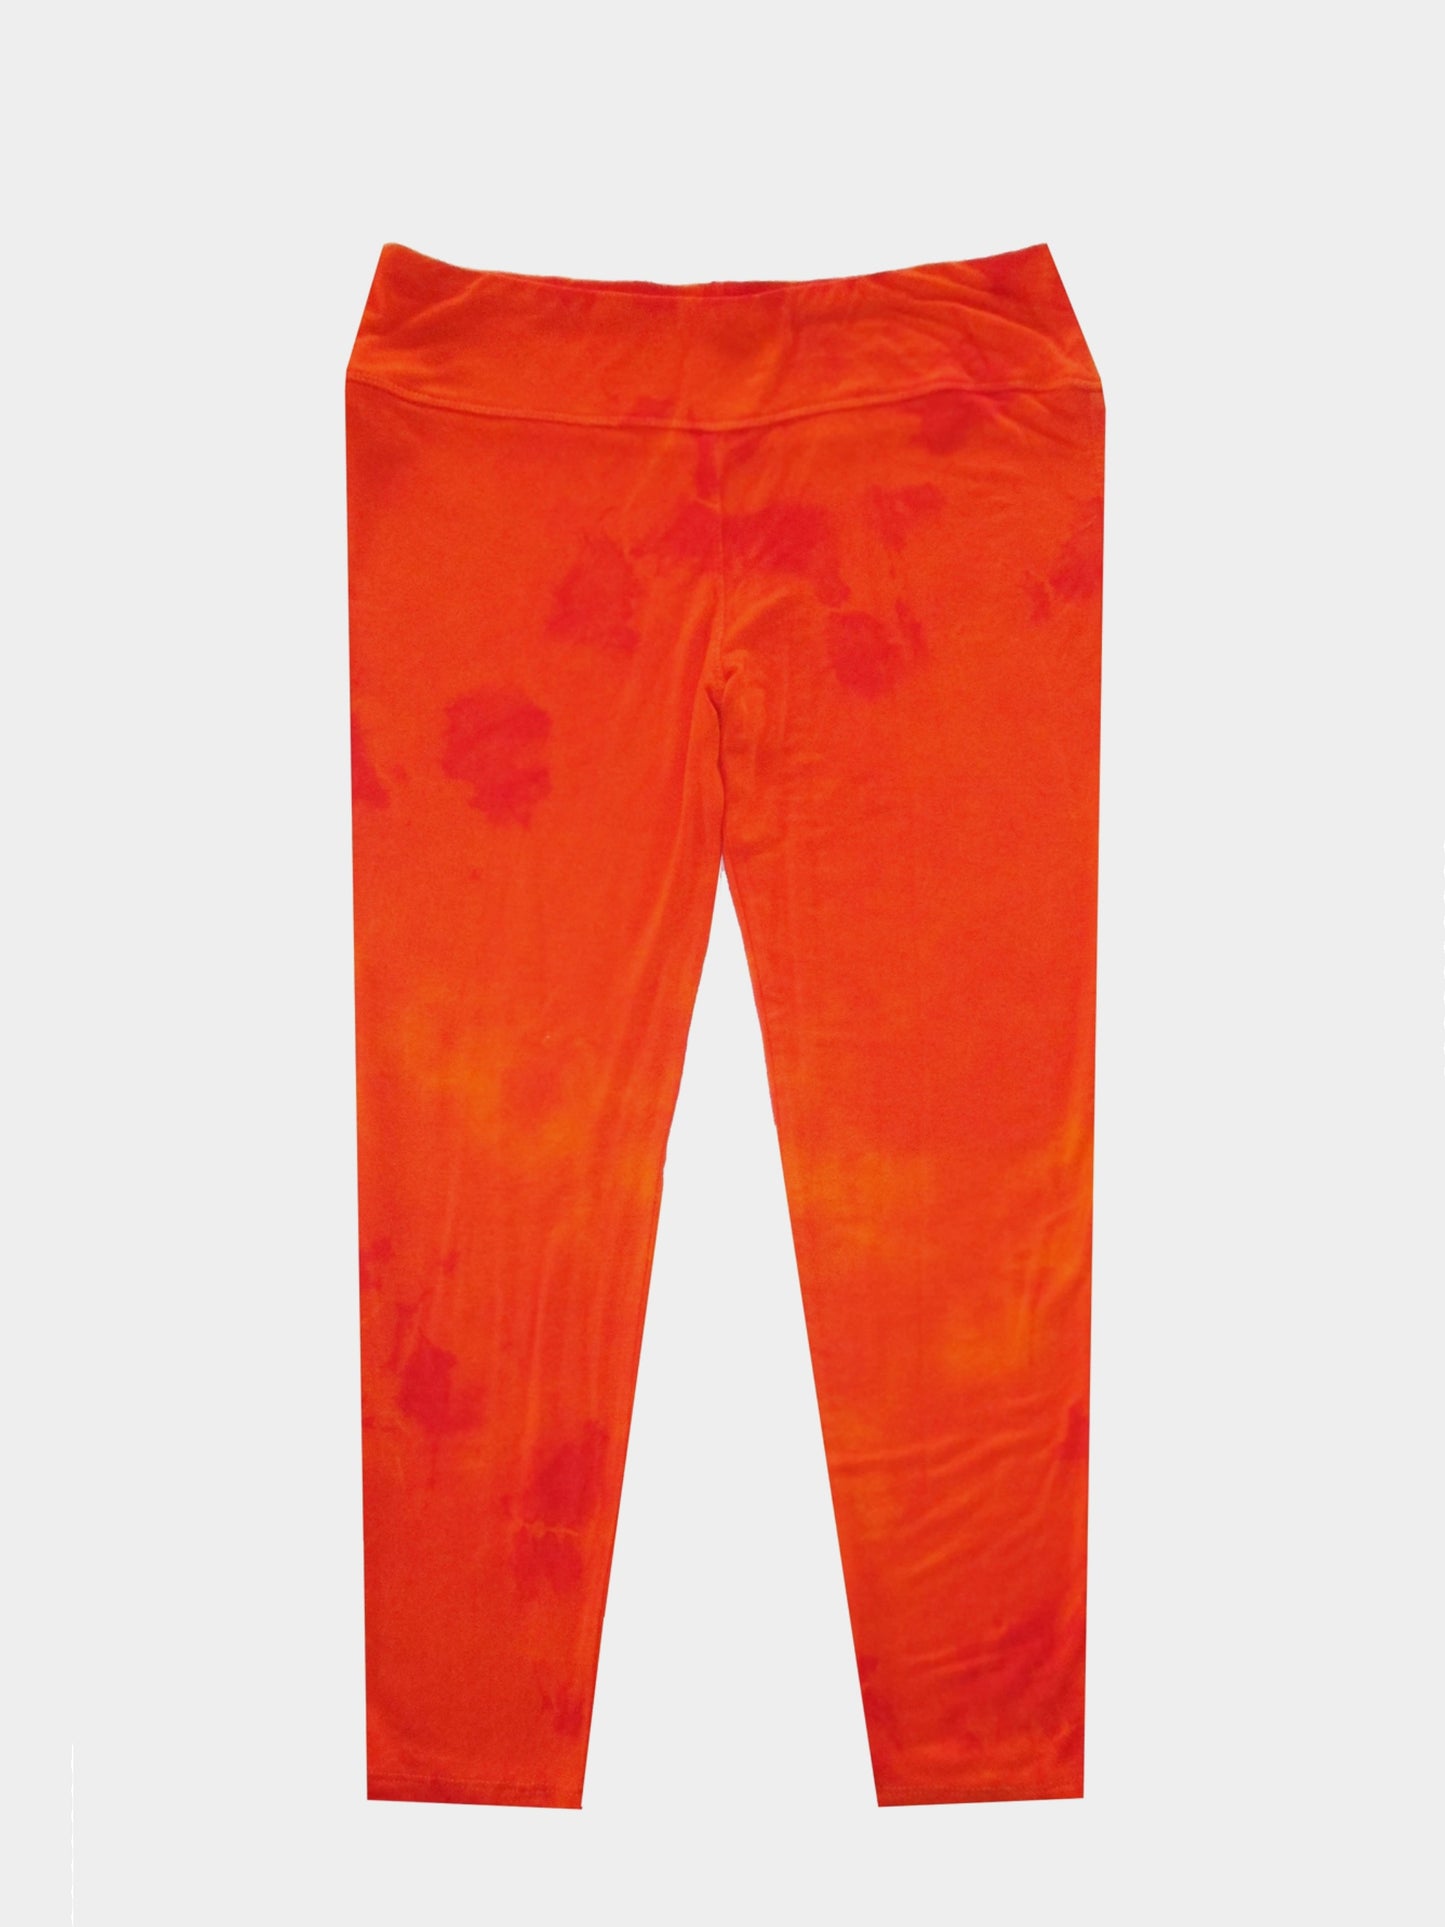 AsYou low rise capri leggings in orange - ShopStyle